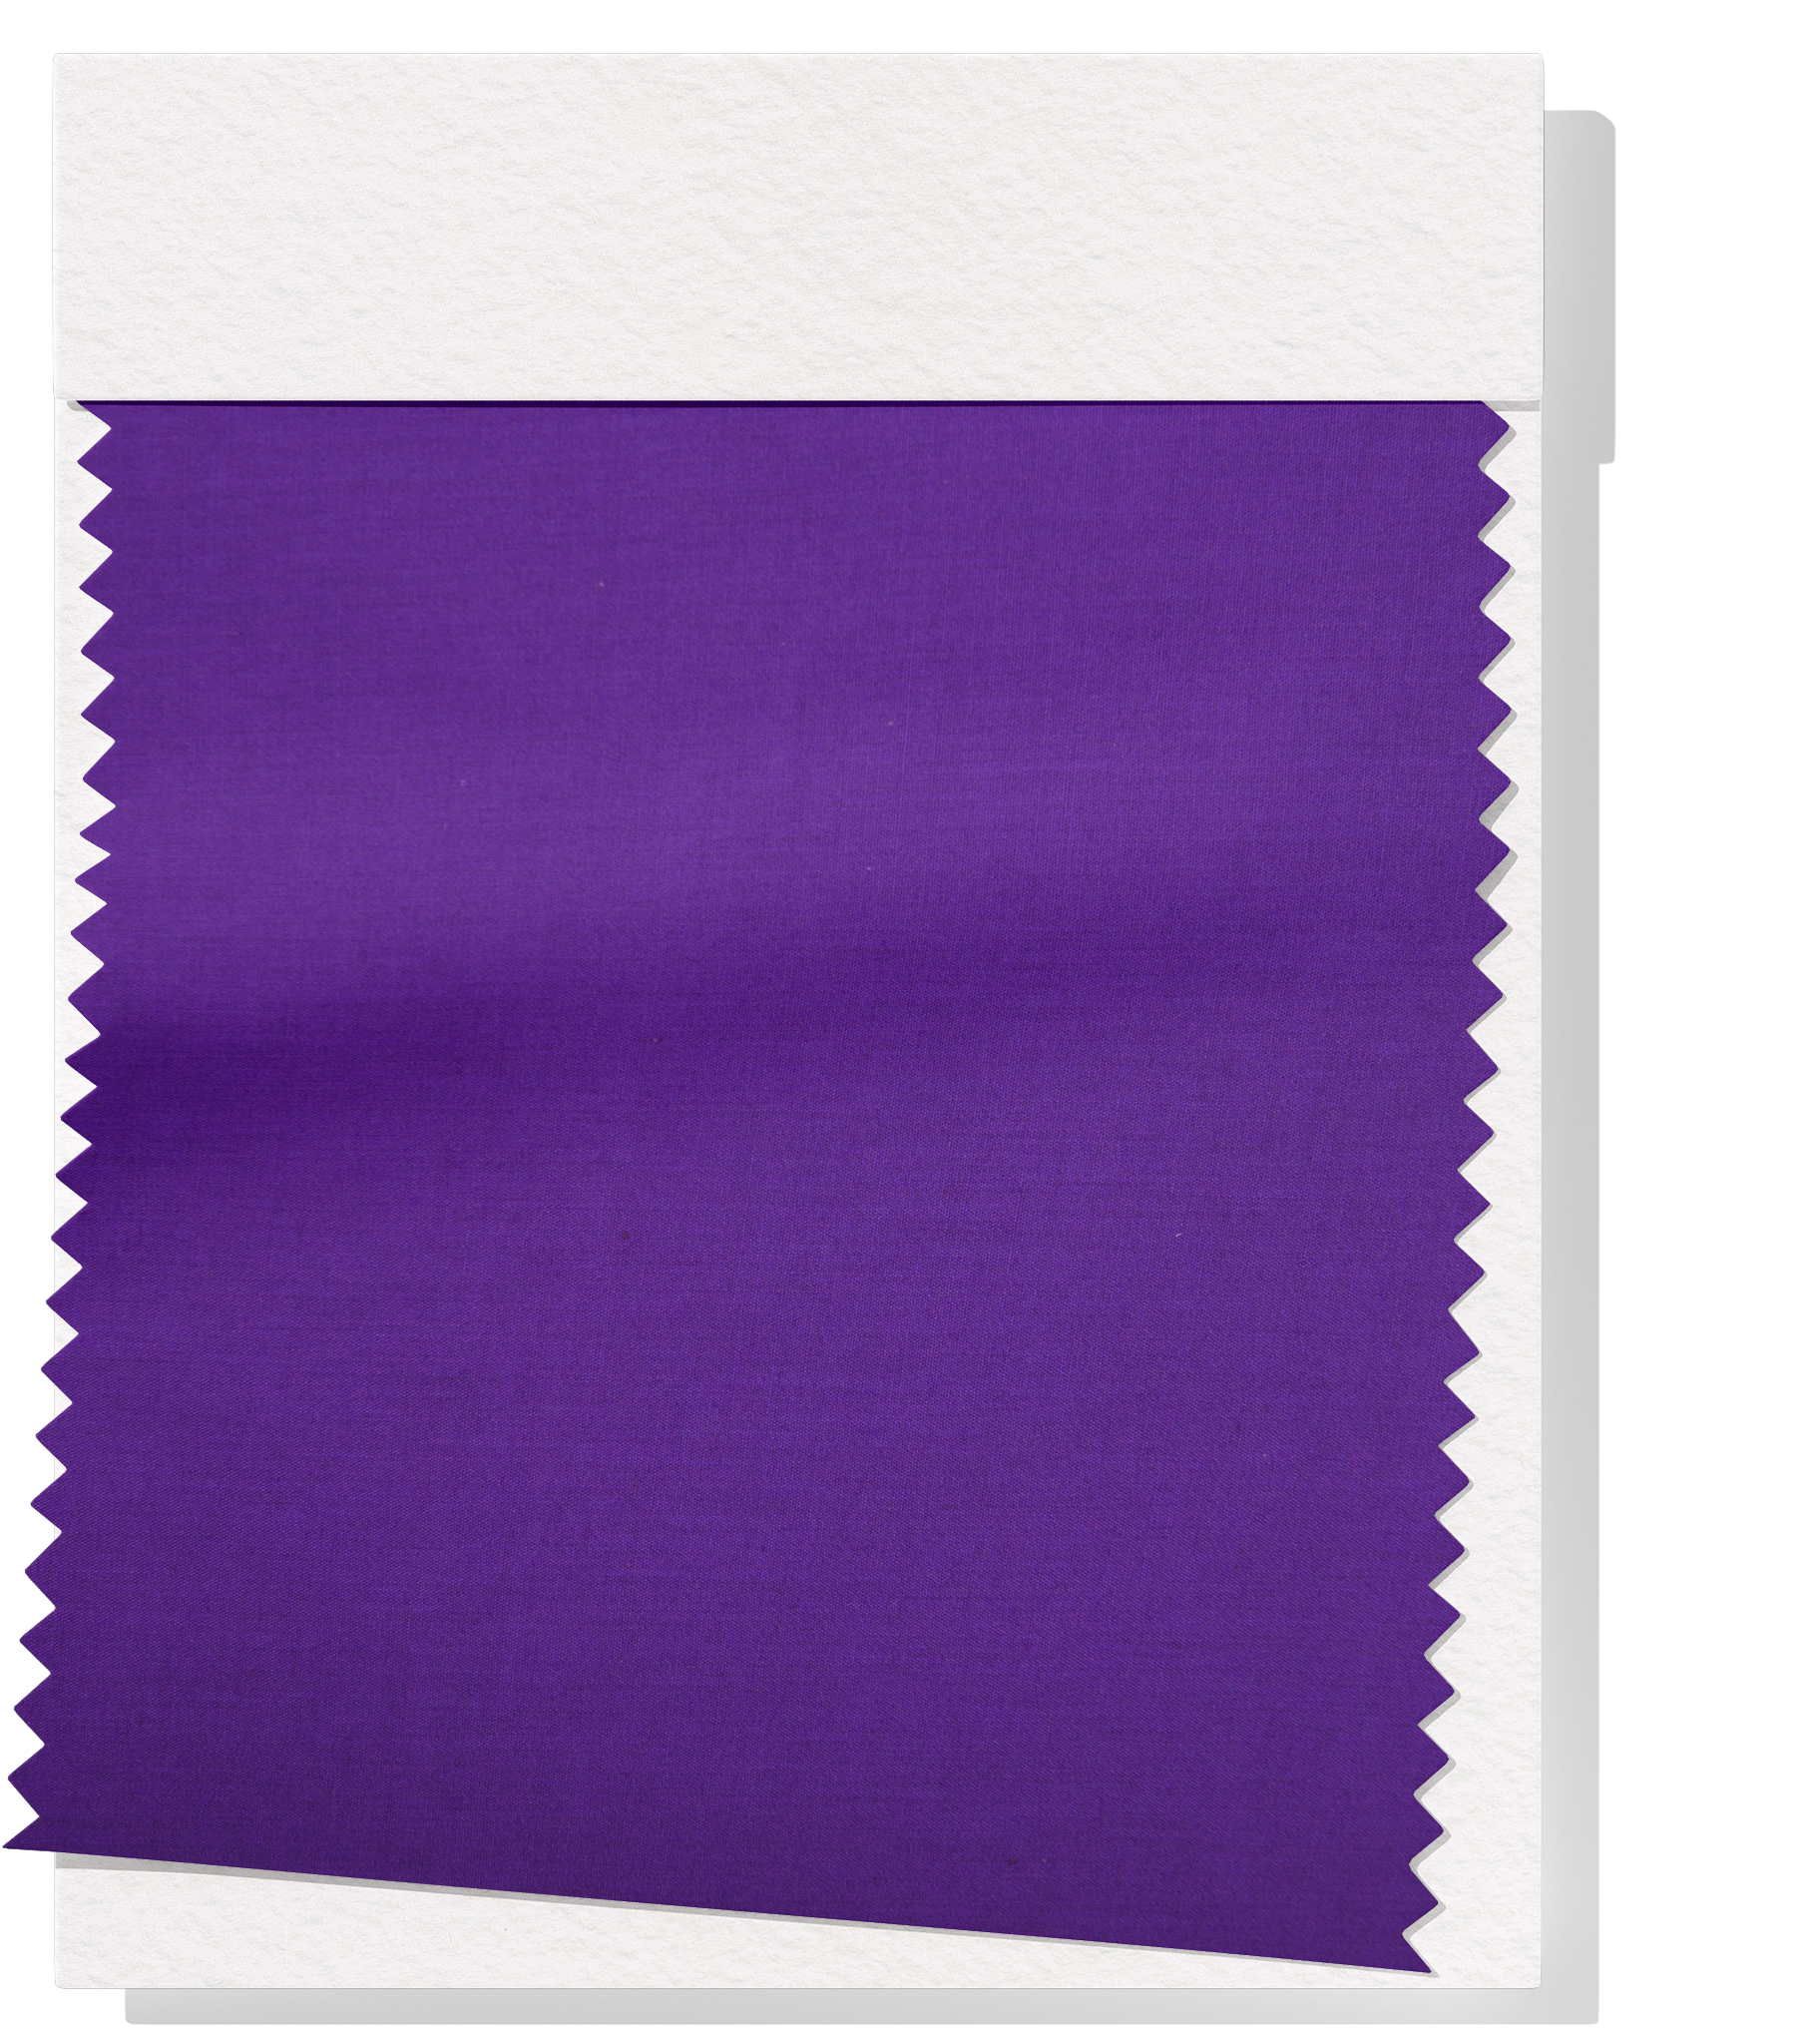 Poplin $5.00p/m - Purple